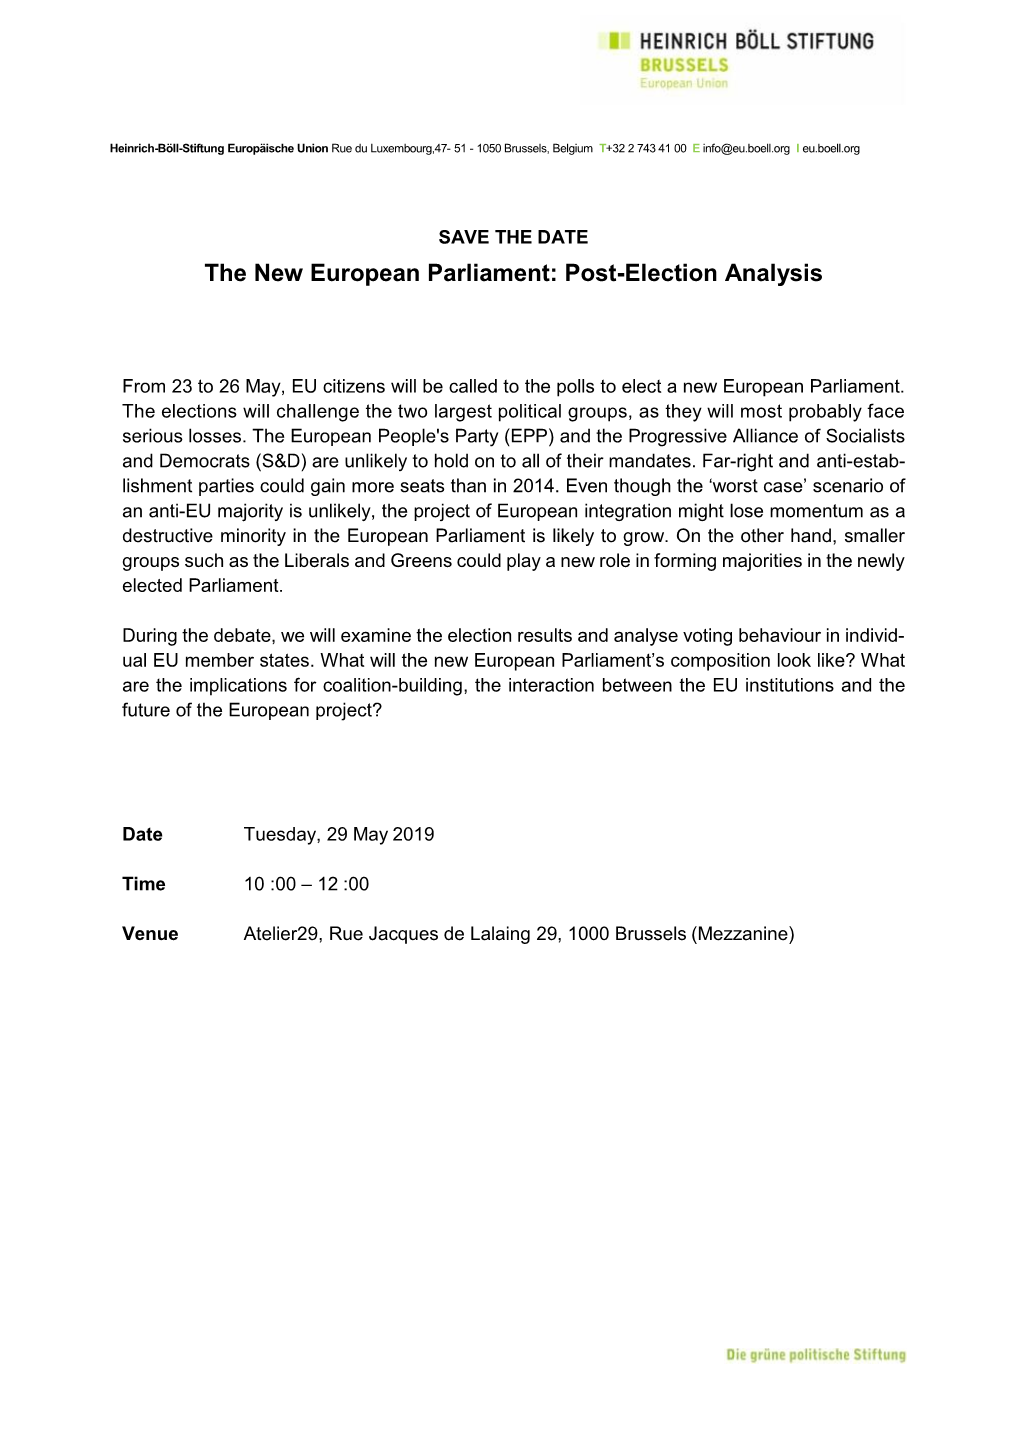 The New European Parliament: Post-Election Analysis